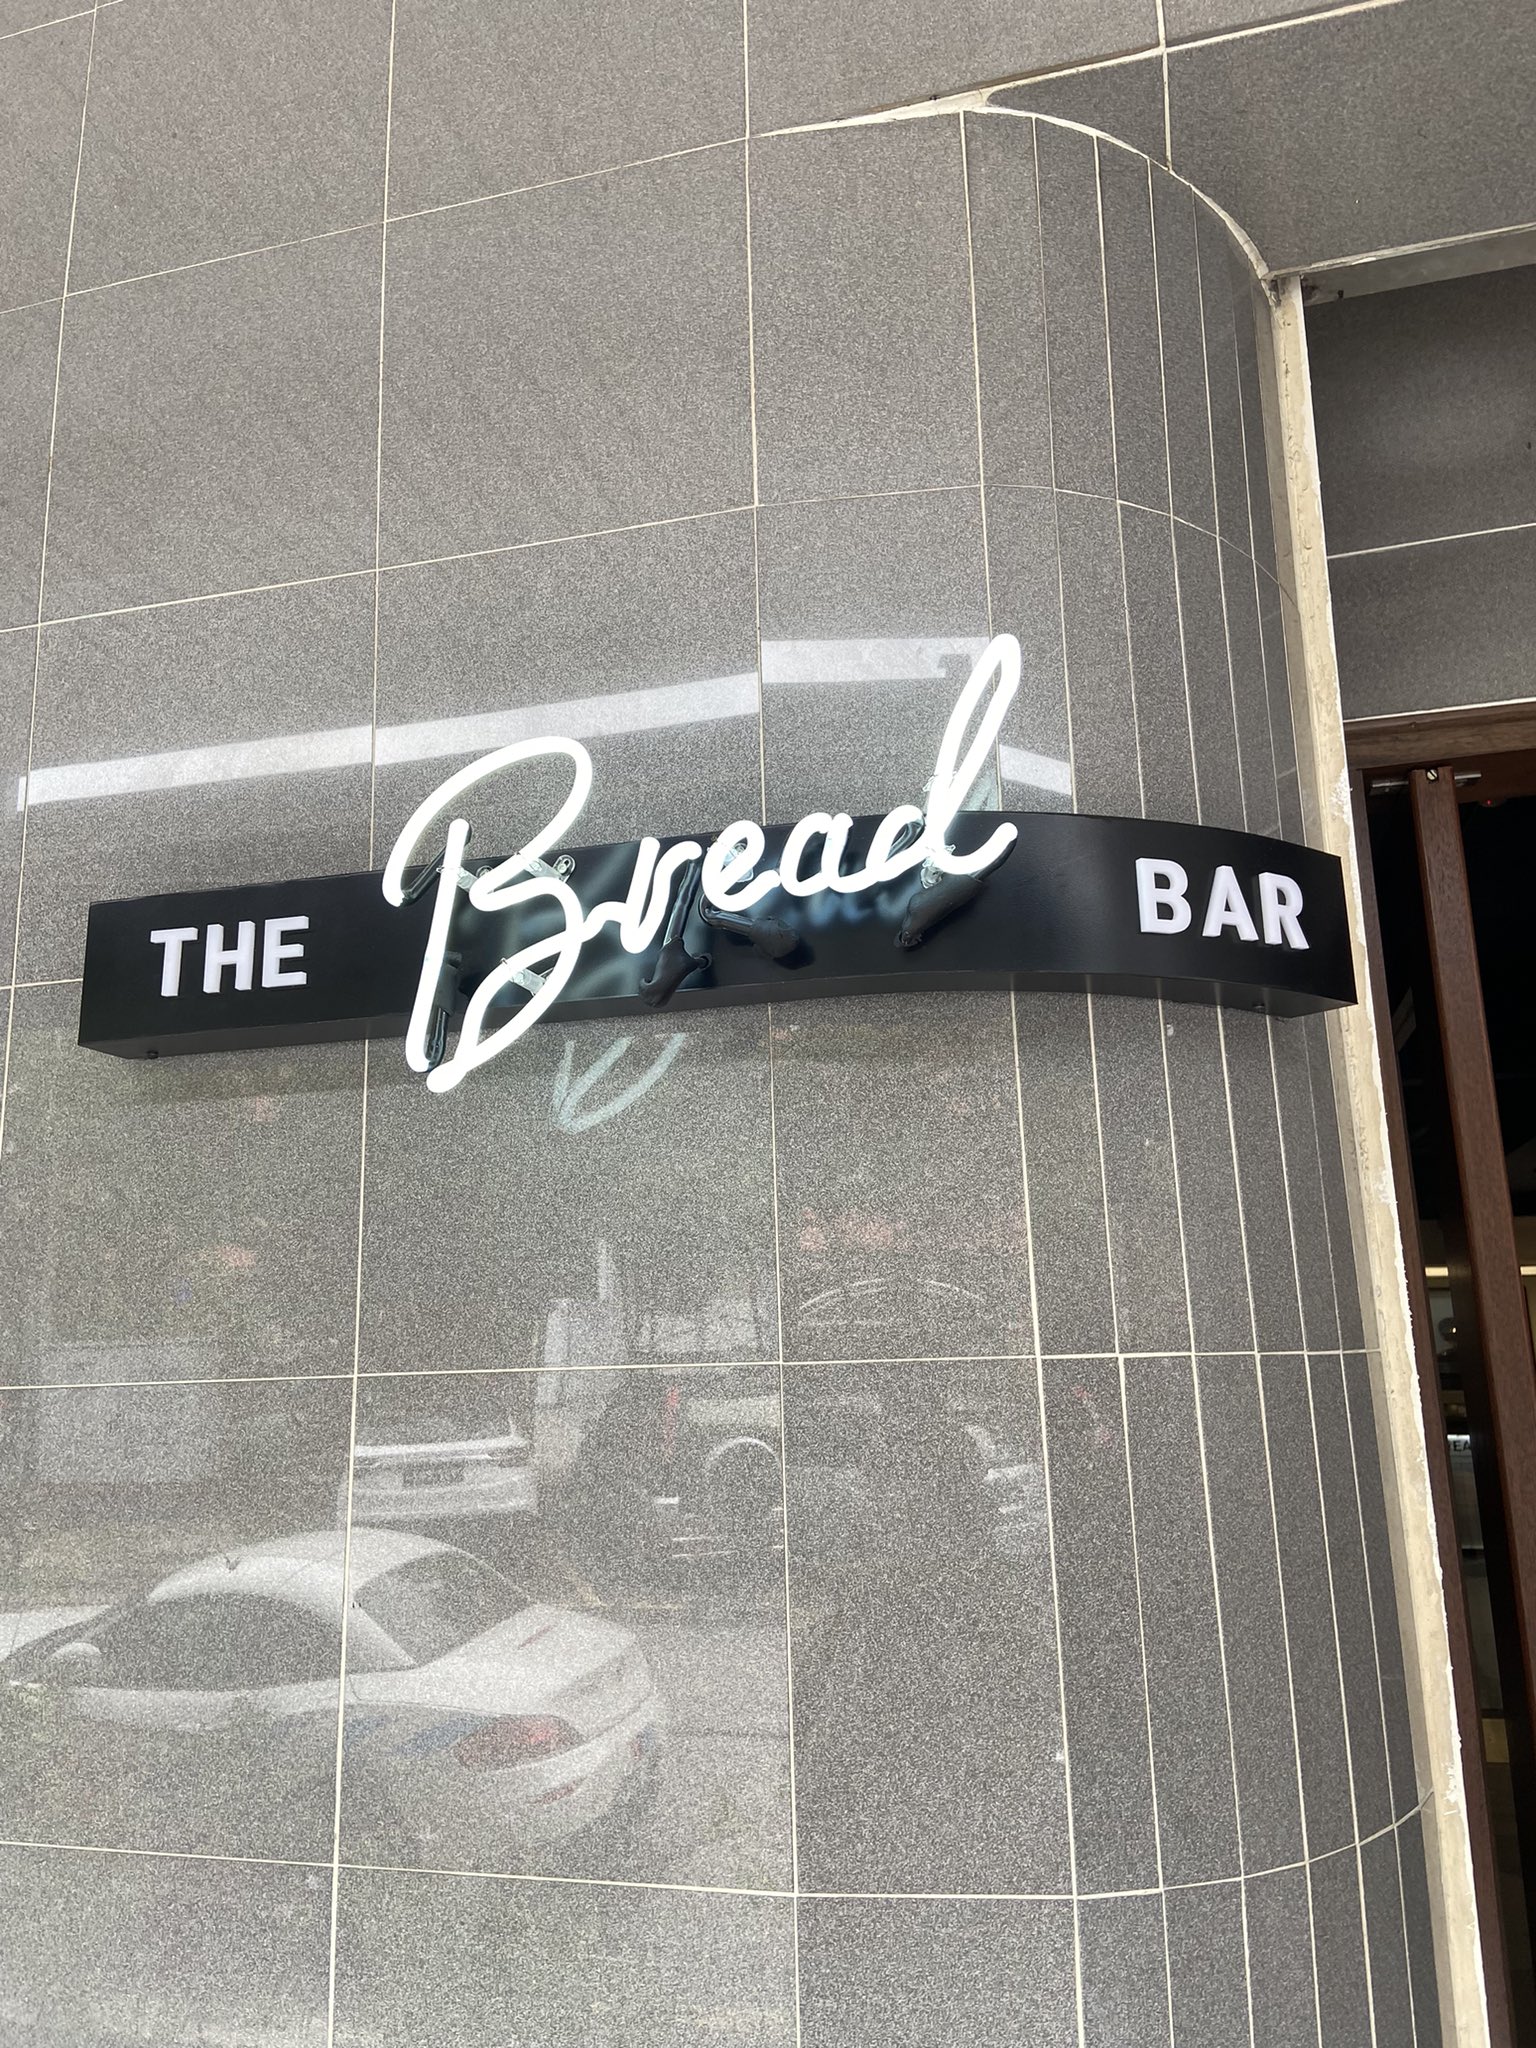 Bread bar ttdi the The Bread